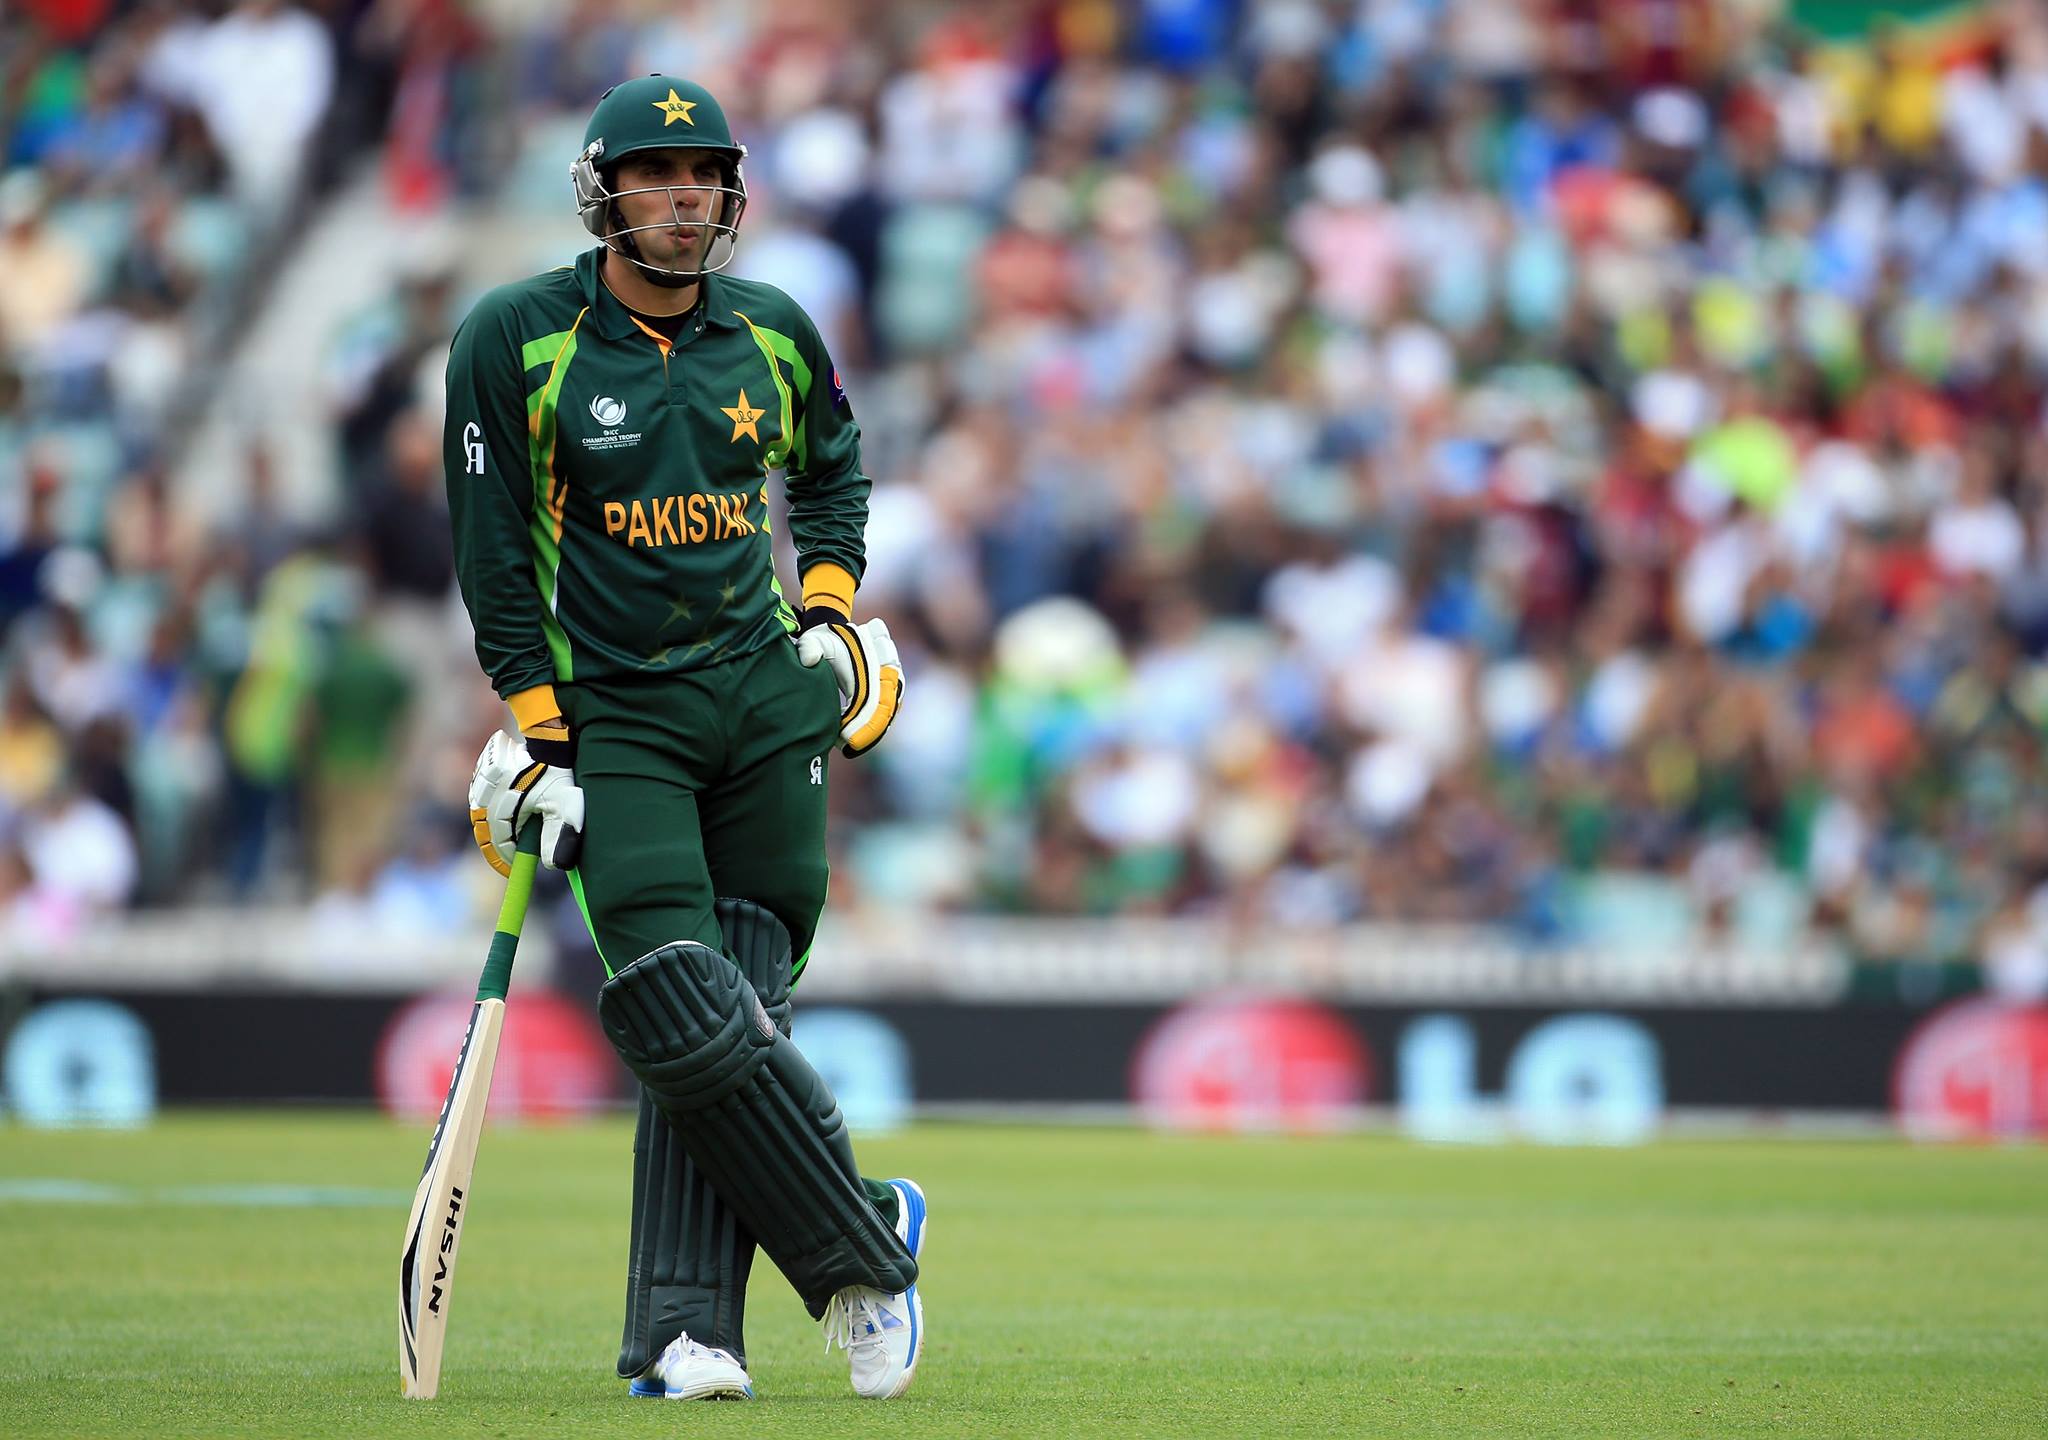 10 Pakistani Batsmen Who Make Us Proud